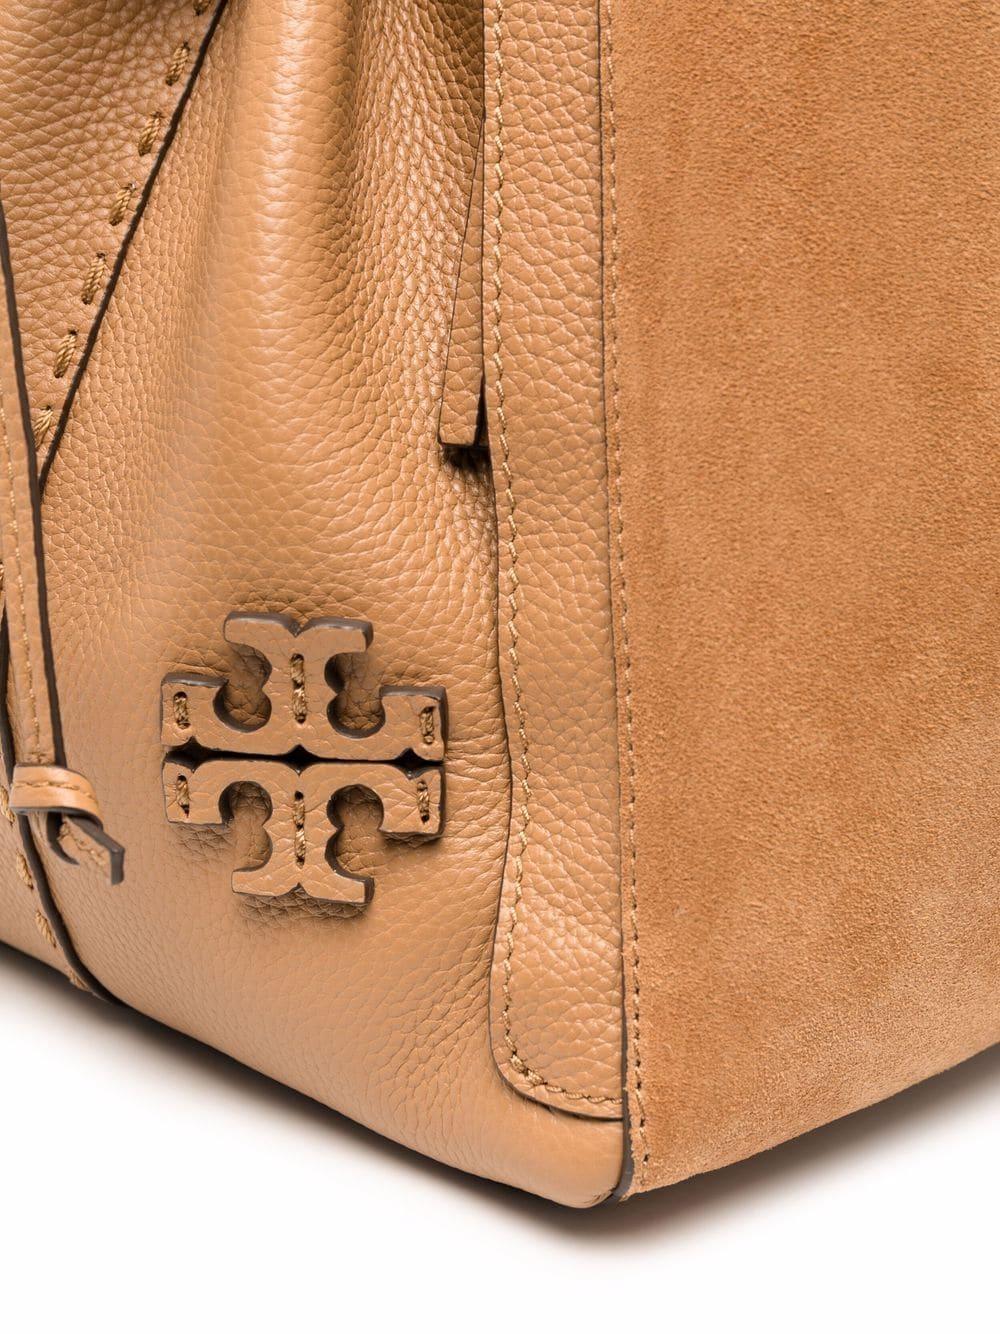 McGraw Suede Dragonfly, Mini Bag, Handbags